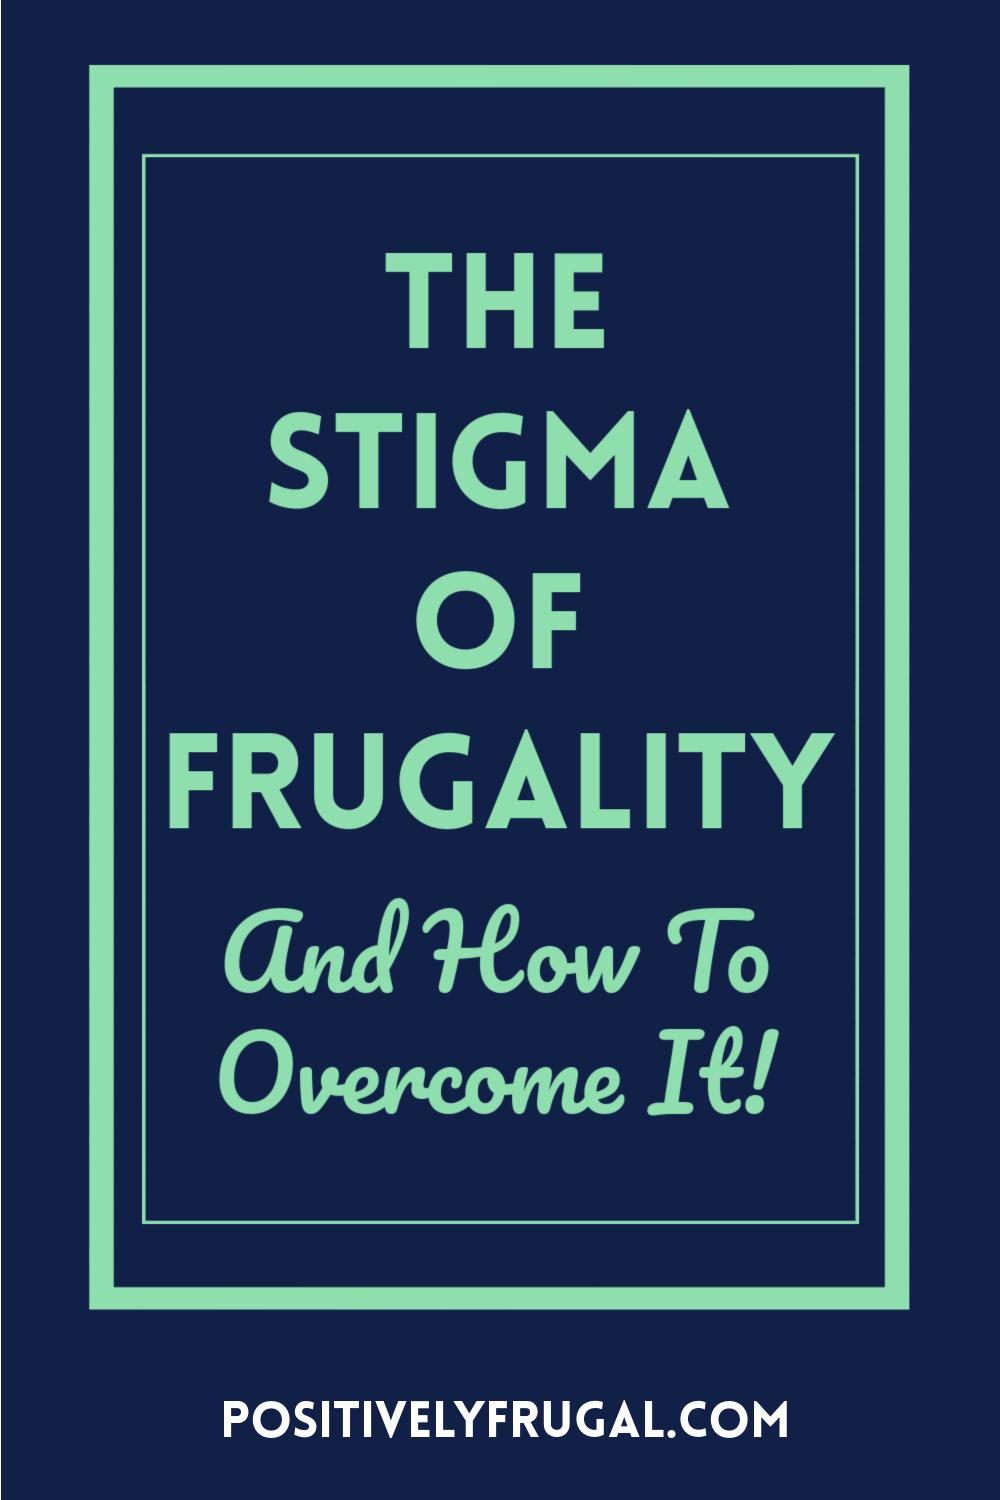 The Stigma of Frugality by PositivelyFrugal.com